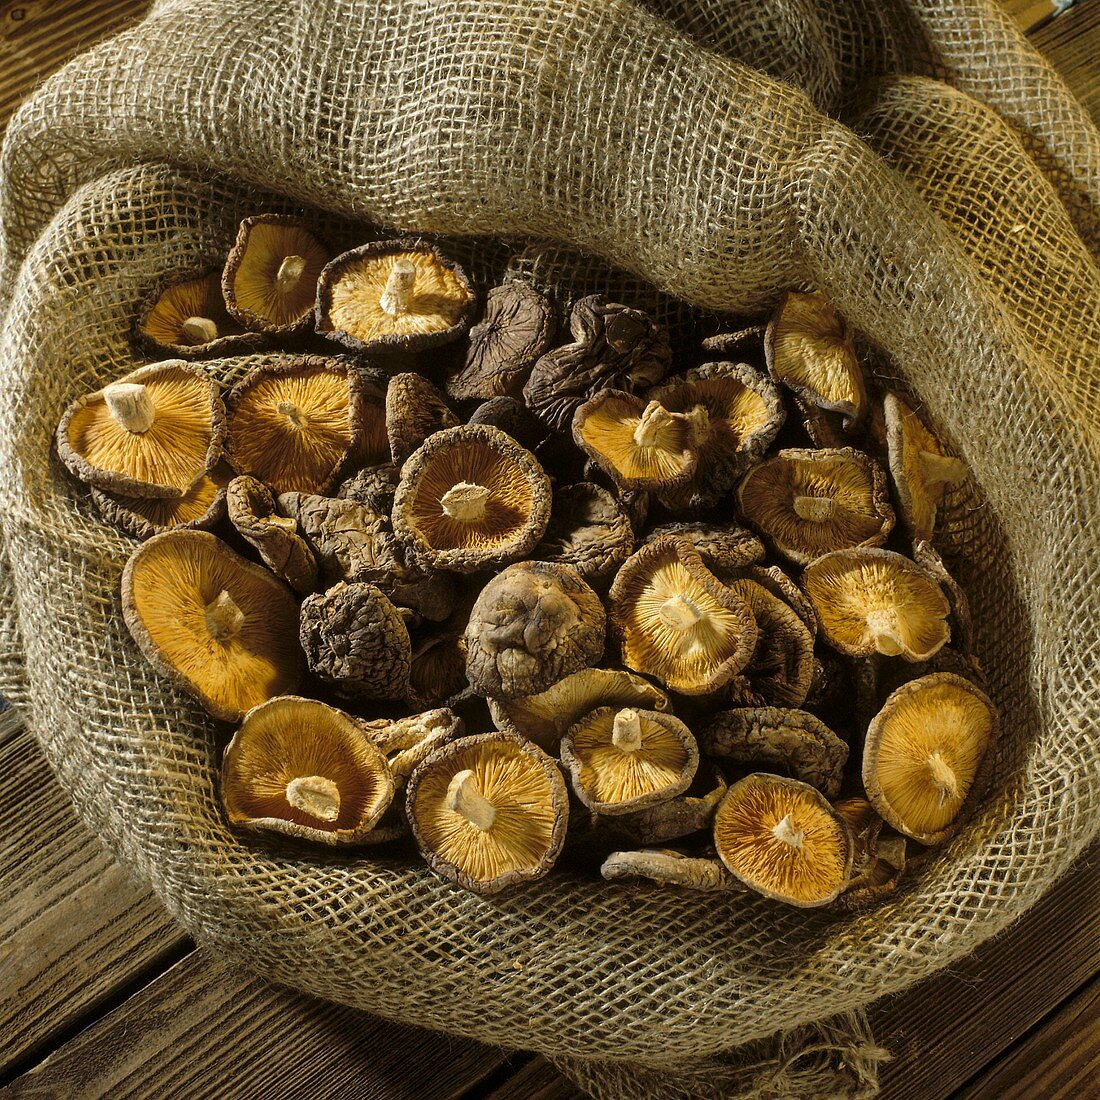 Many dried Tongku mushrooms (Donggu) on jute sack